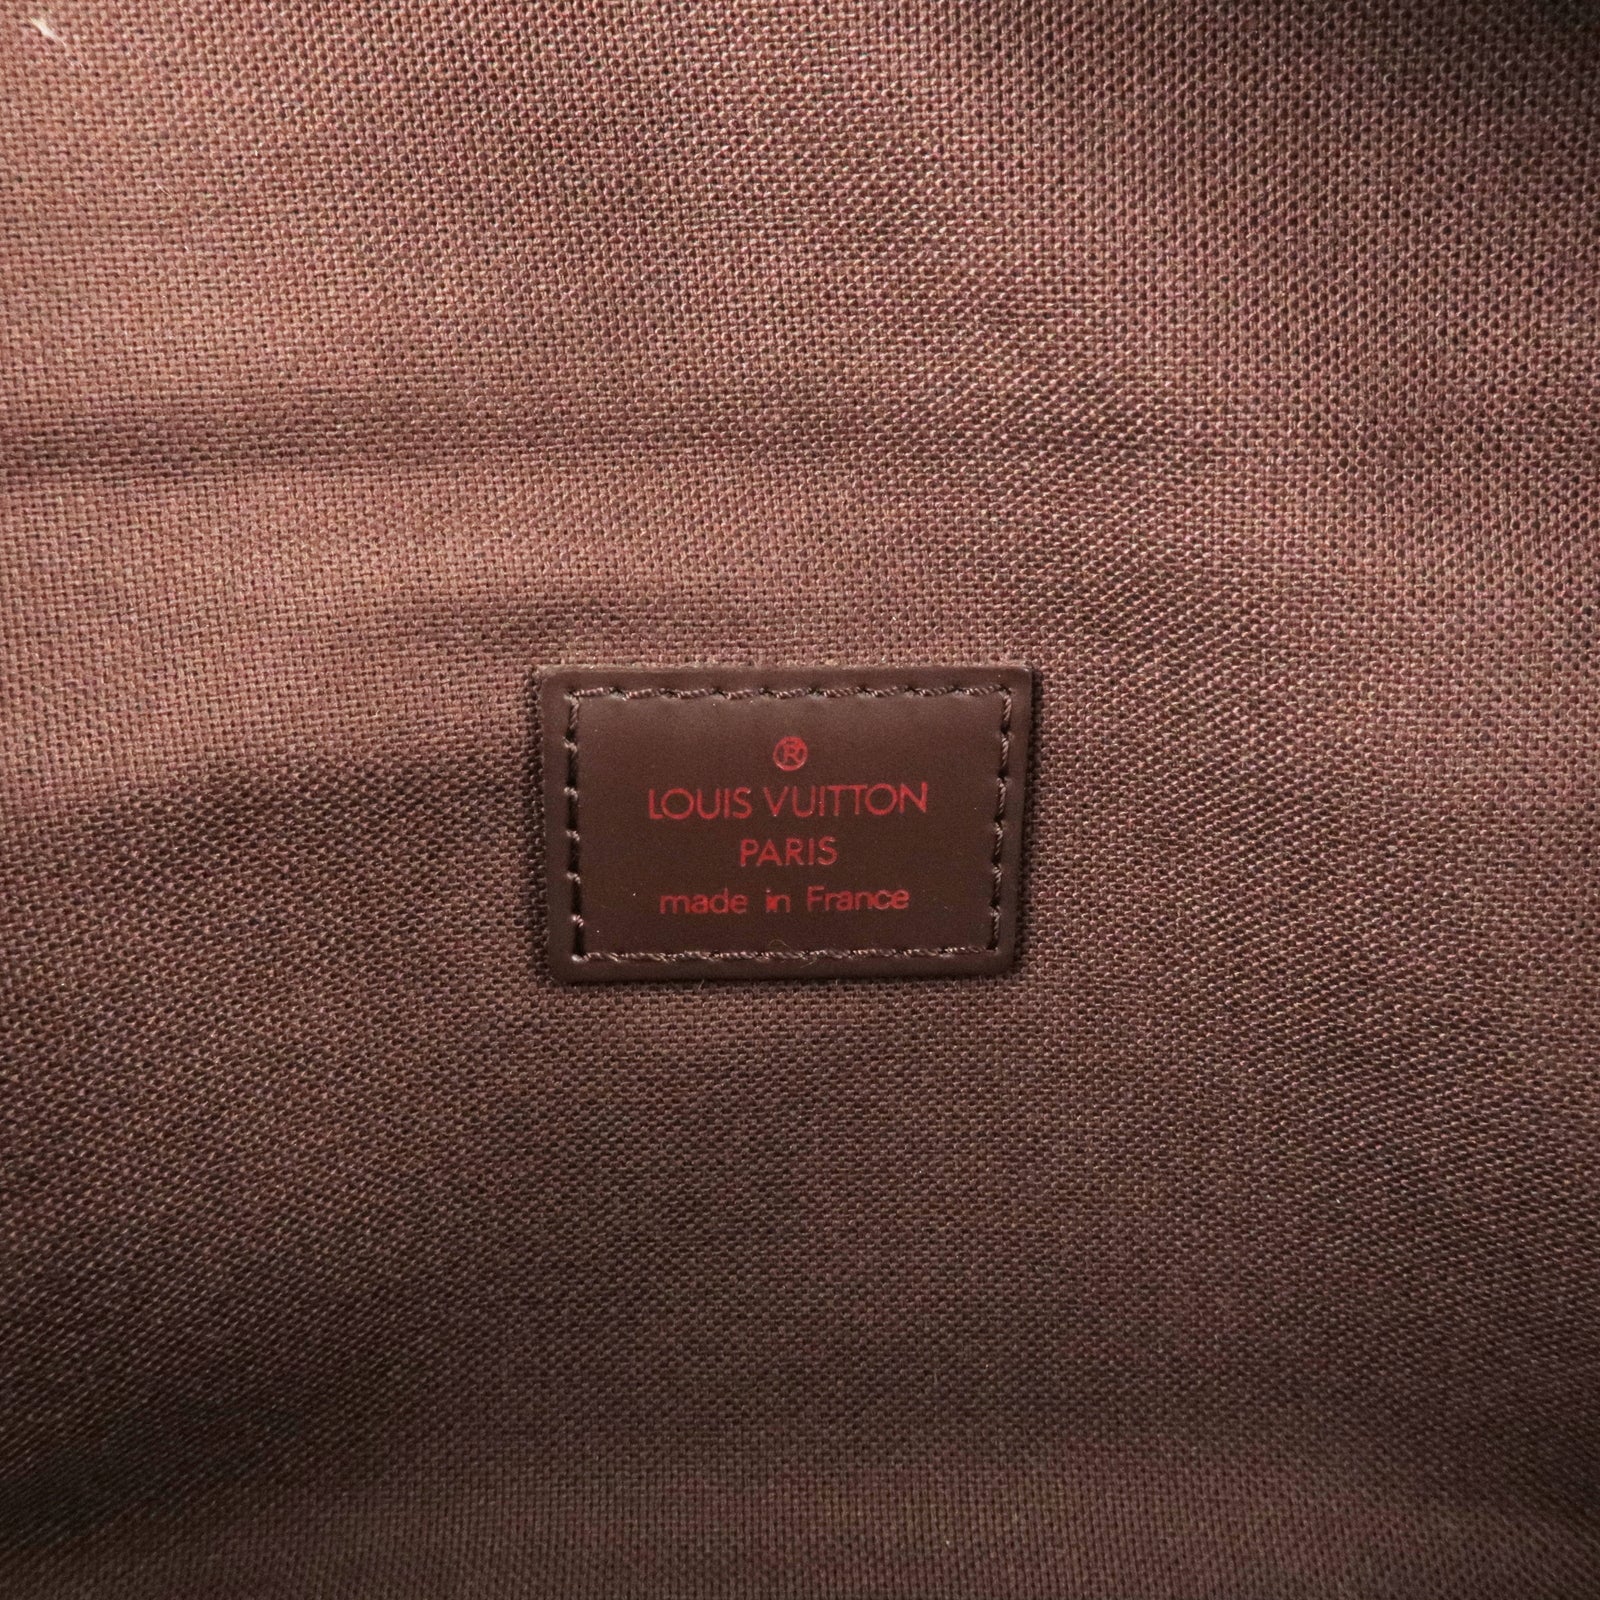 Bag - Body - Bam - Louis - Vuitton - N51172 – Kanye West for Louis Vuitton  Dons $870 - Melville - Bag - Damier - Waist - Bag - Brazalete Louis Vuitton  Empreinte en oro blanco